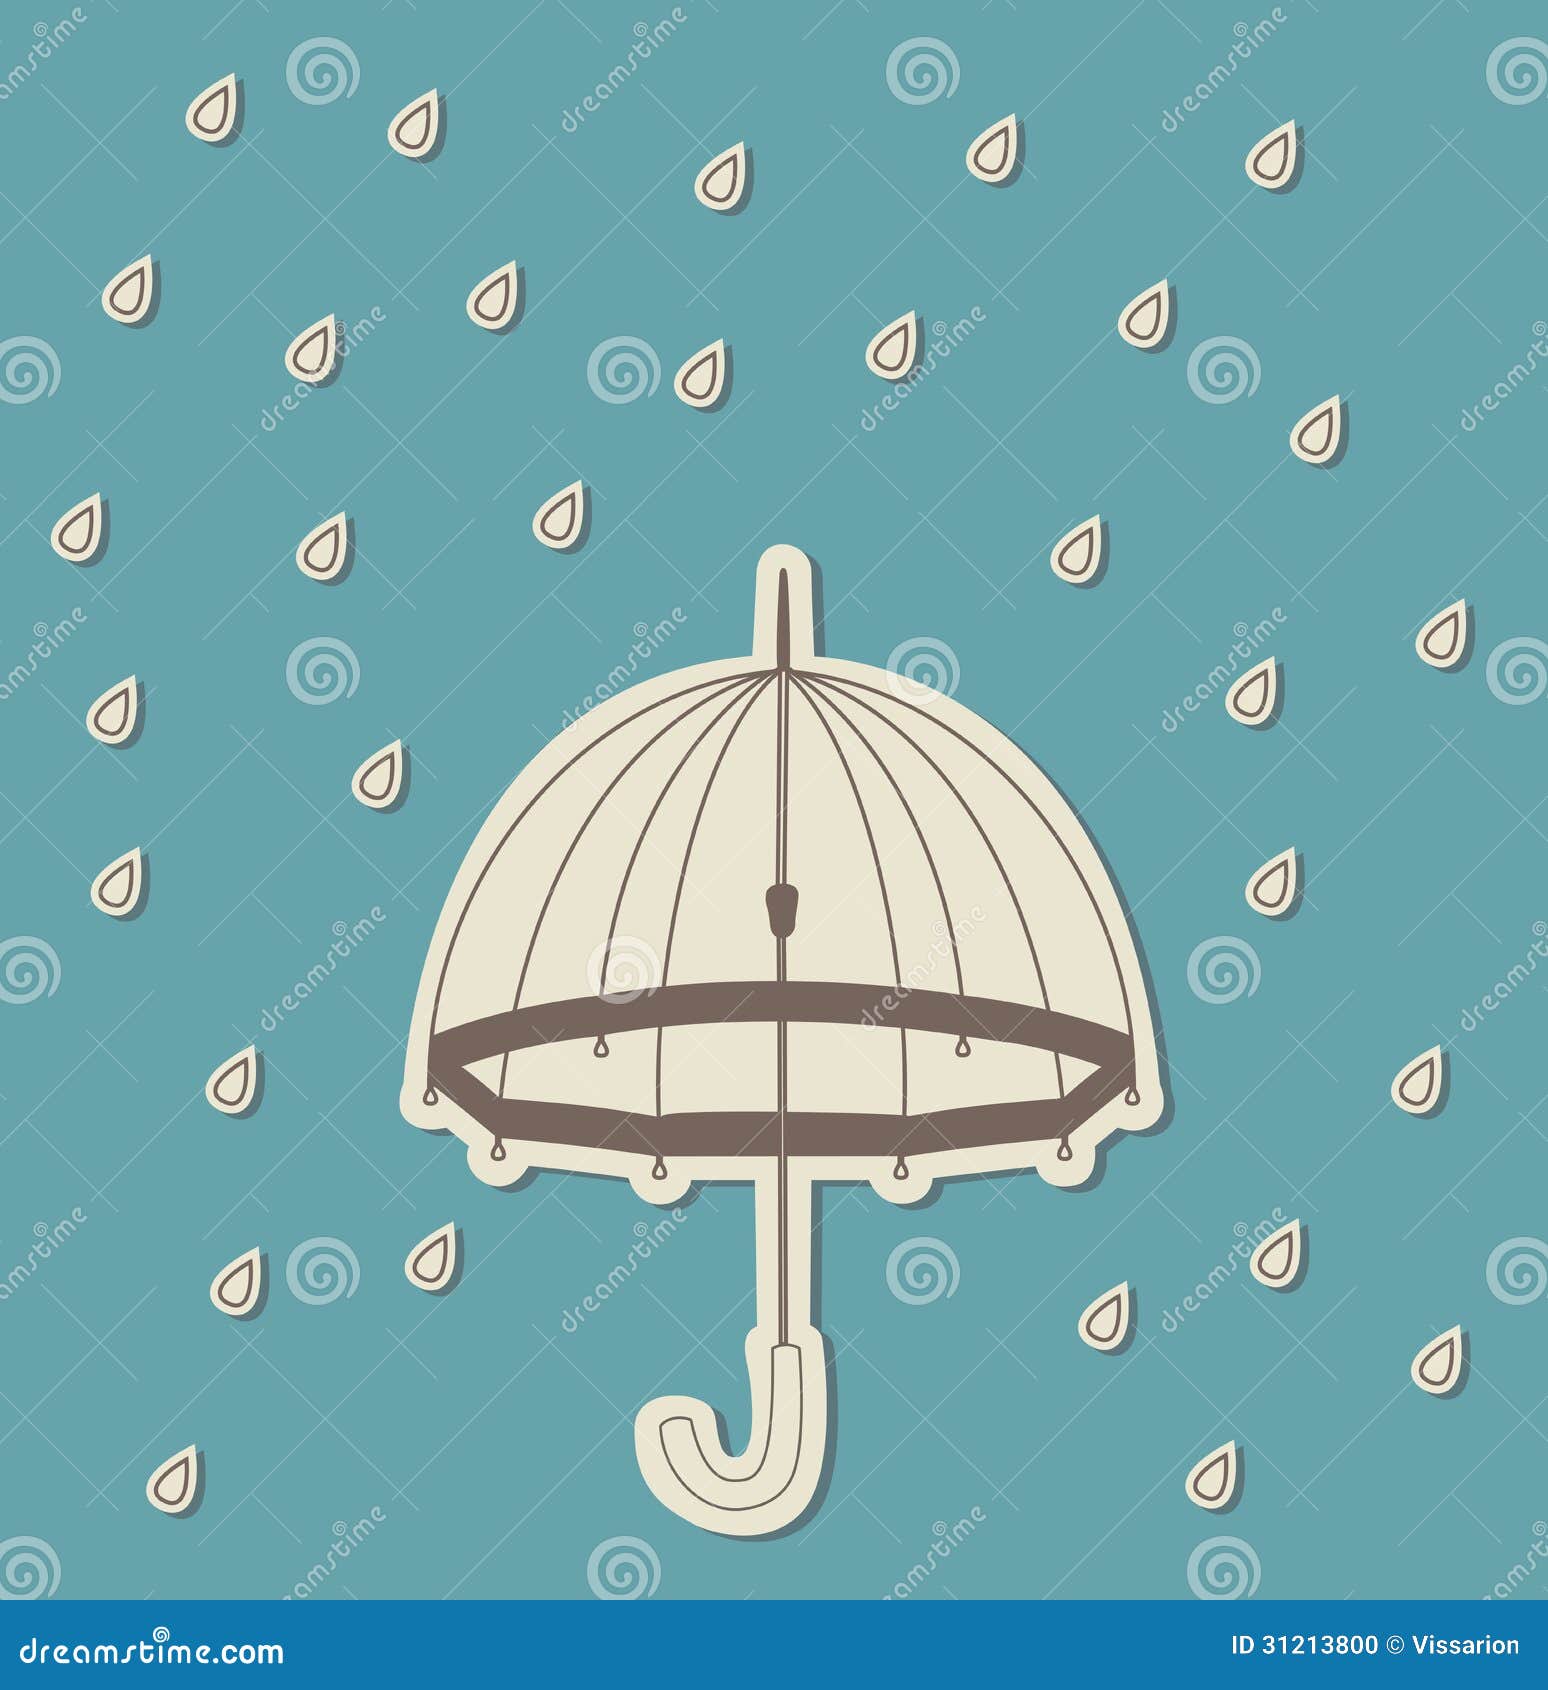 Umbrella in the rain stock vector. Illustration of cardboard - 31213800